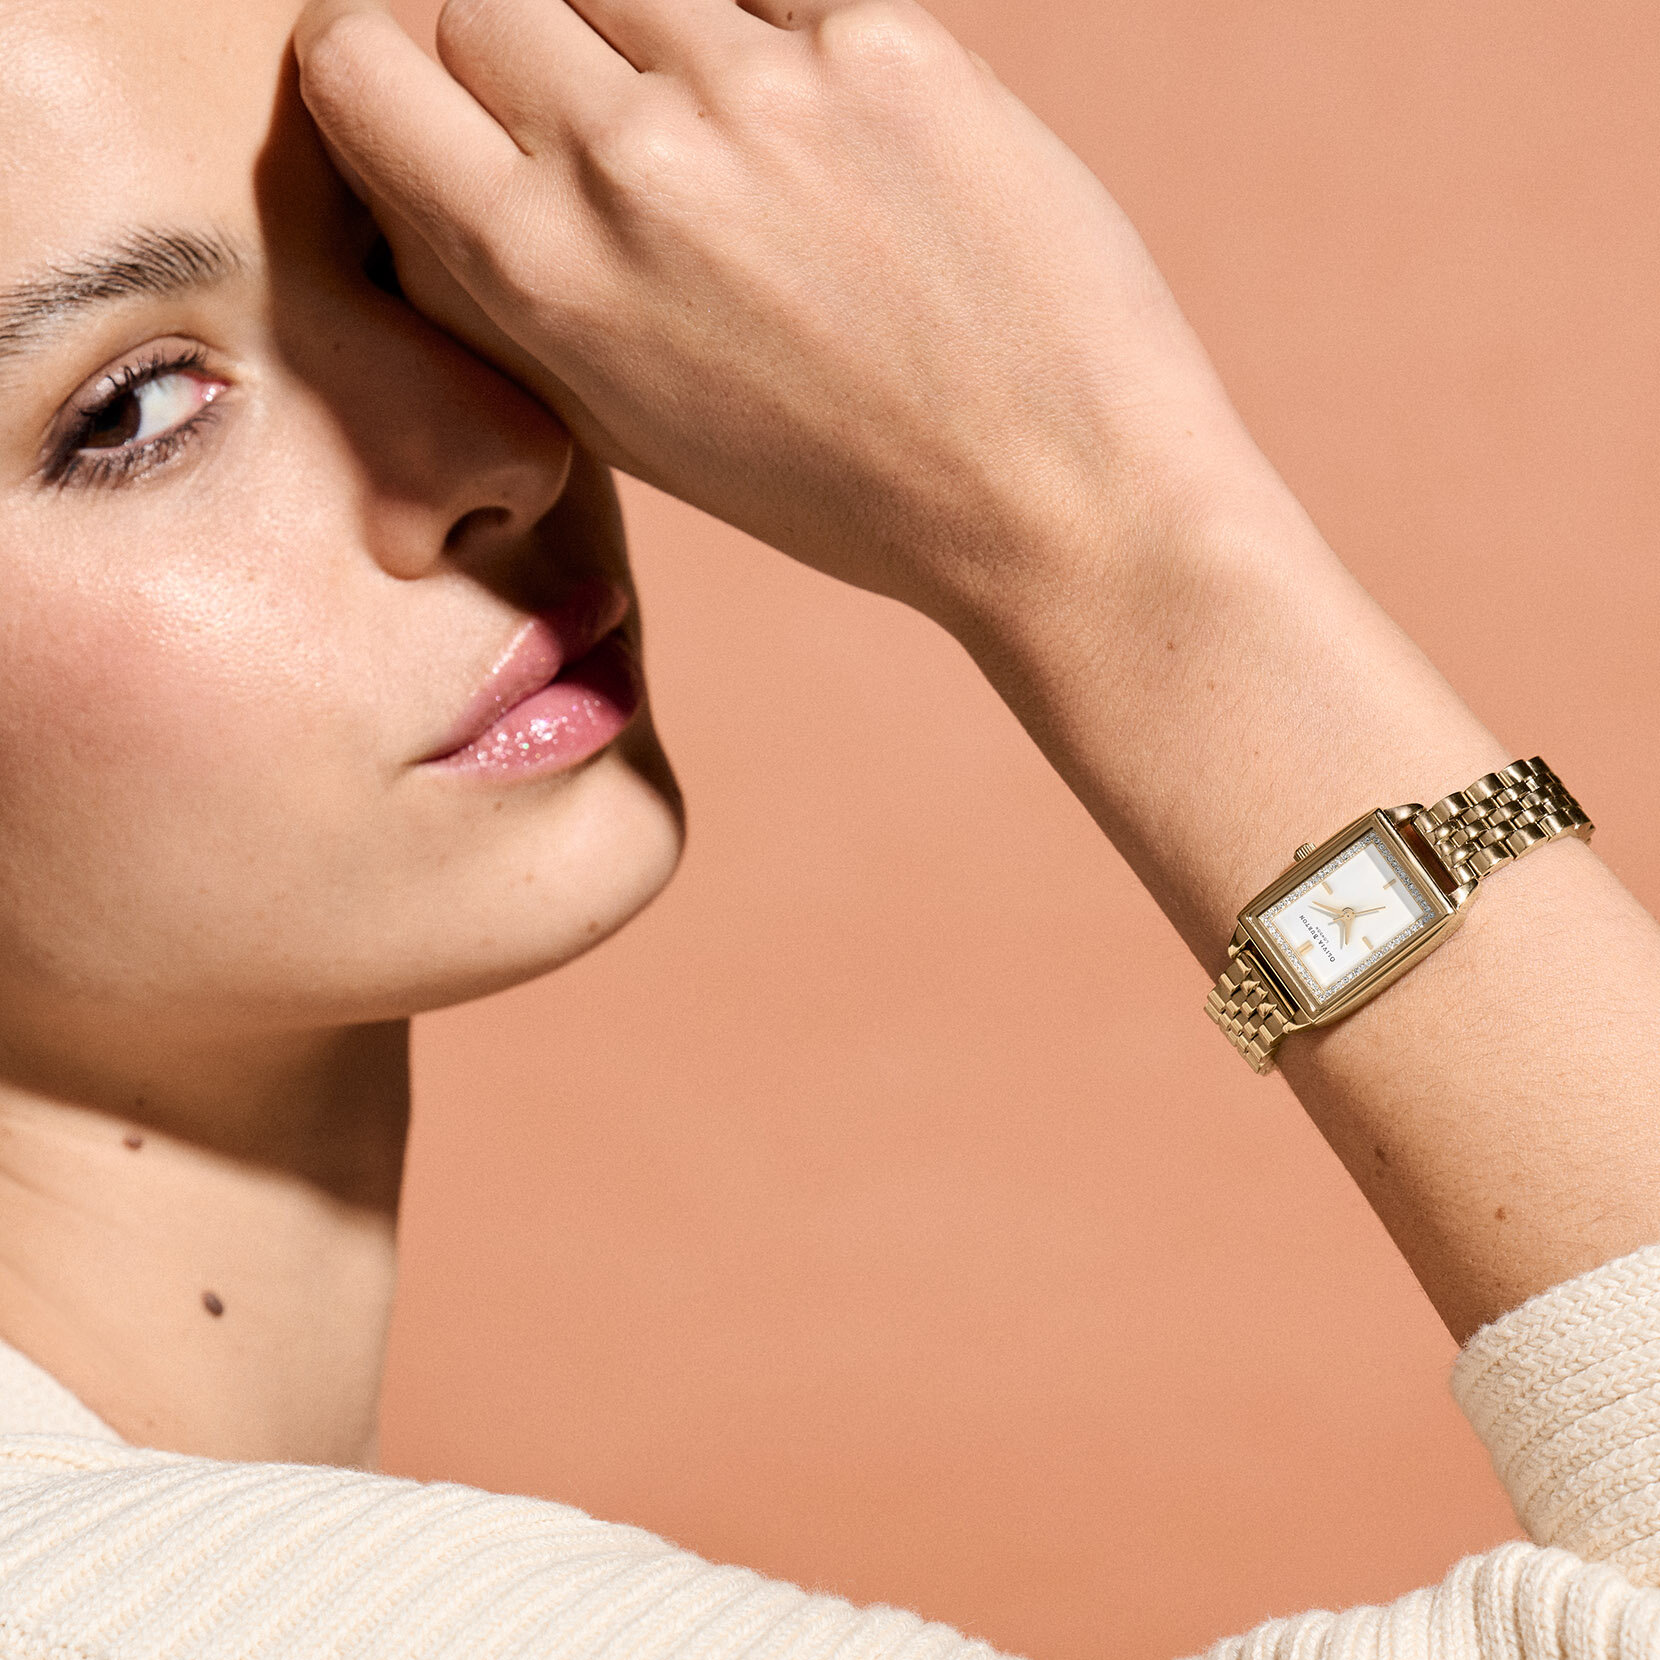 21mm Rectangle White & Gold Bracelet Watch